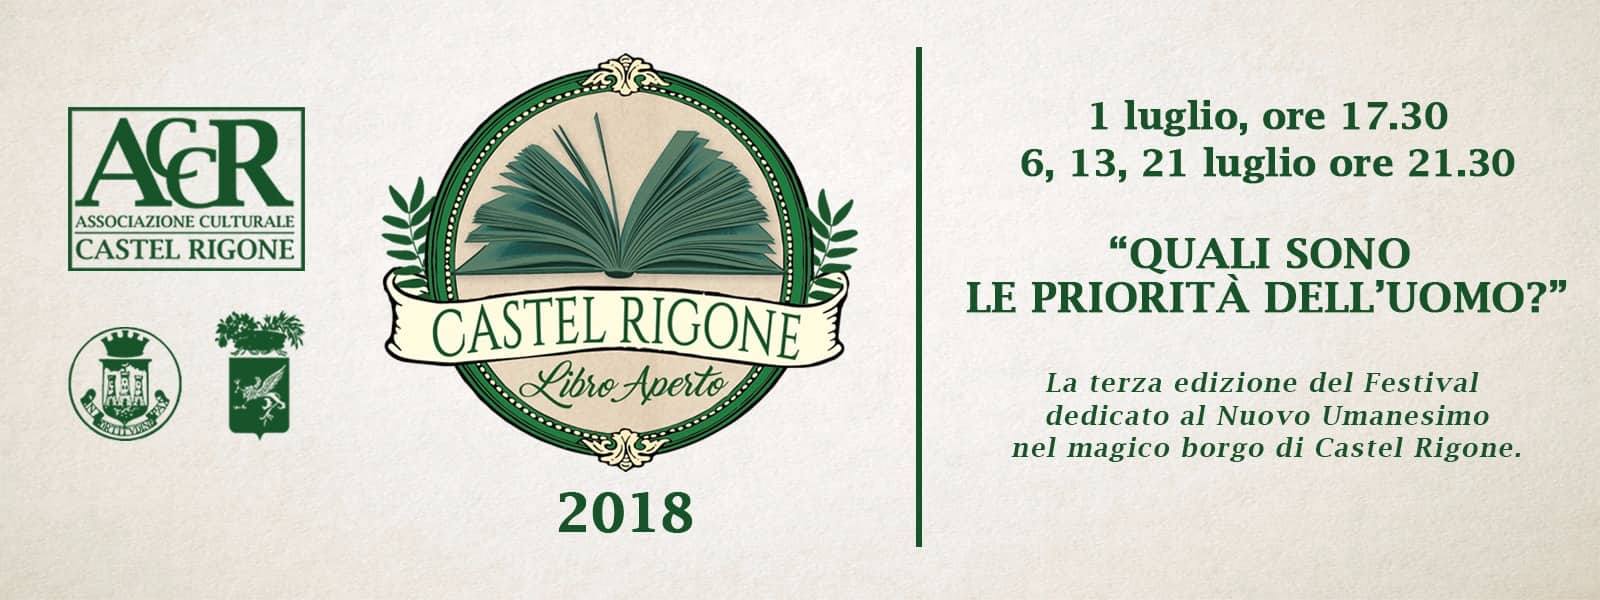 Festival Castel Rigone Libro Aperto 1